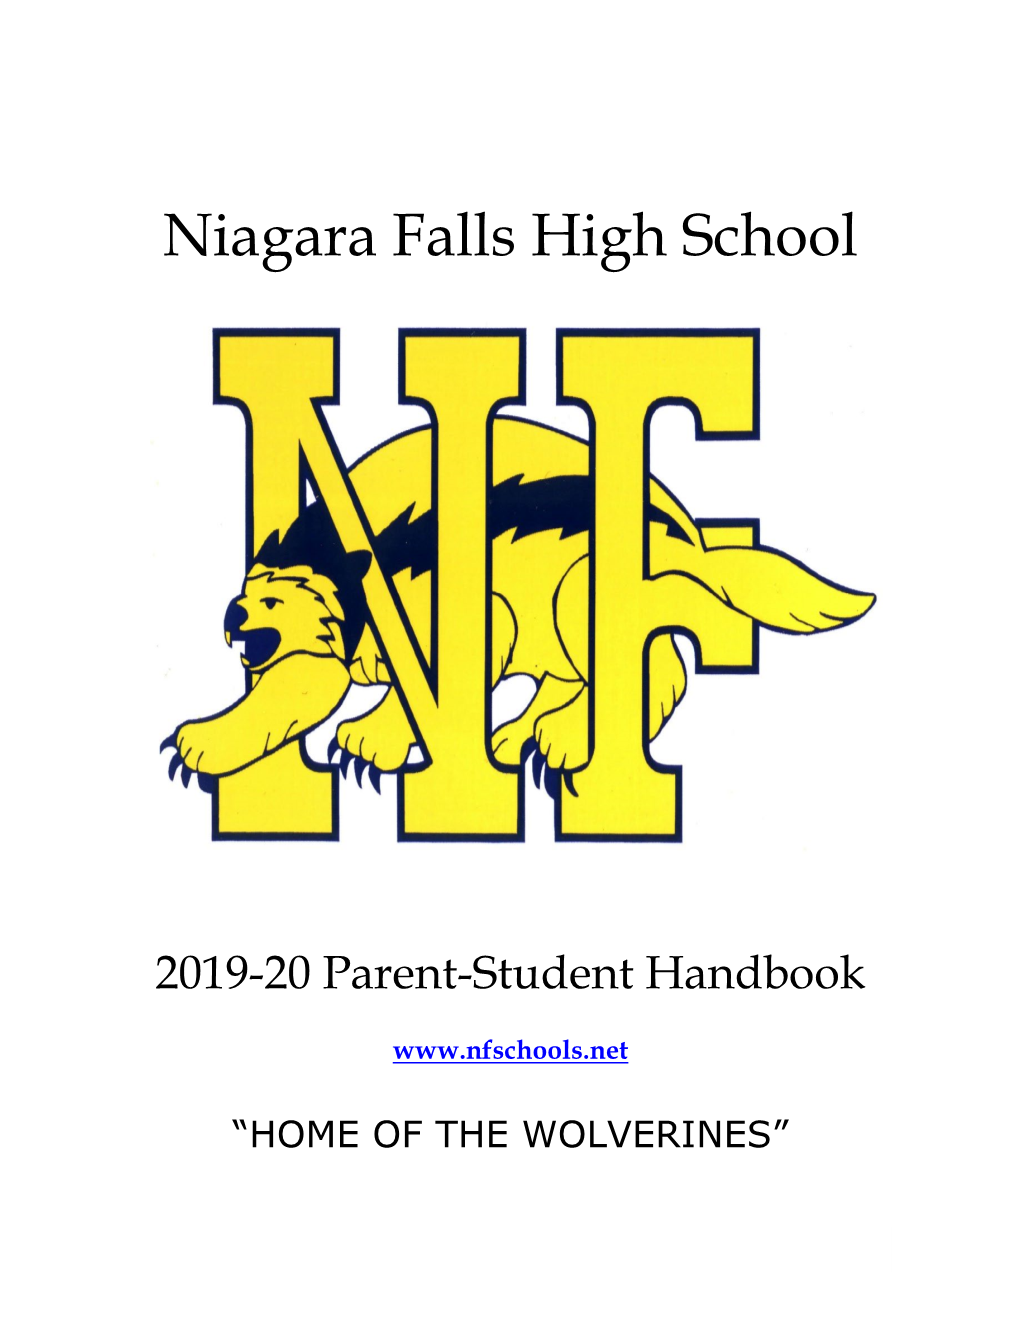 NFHS Parent-Student Handbook